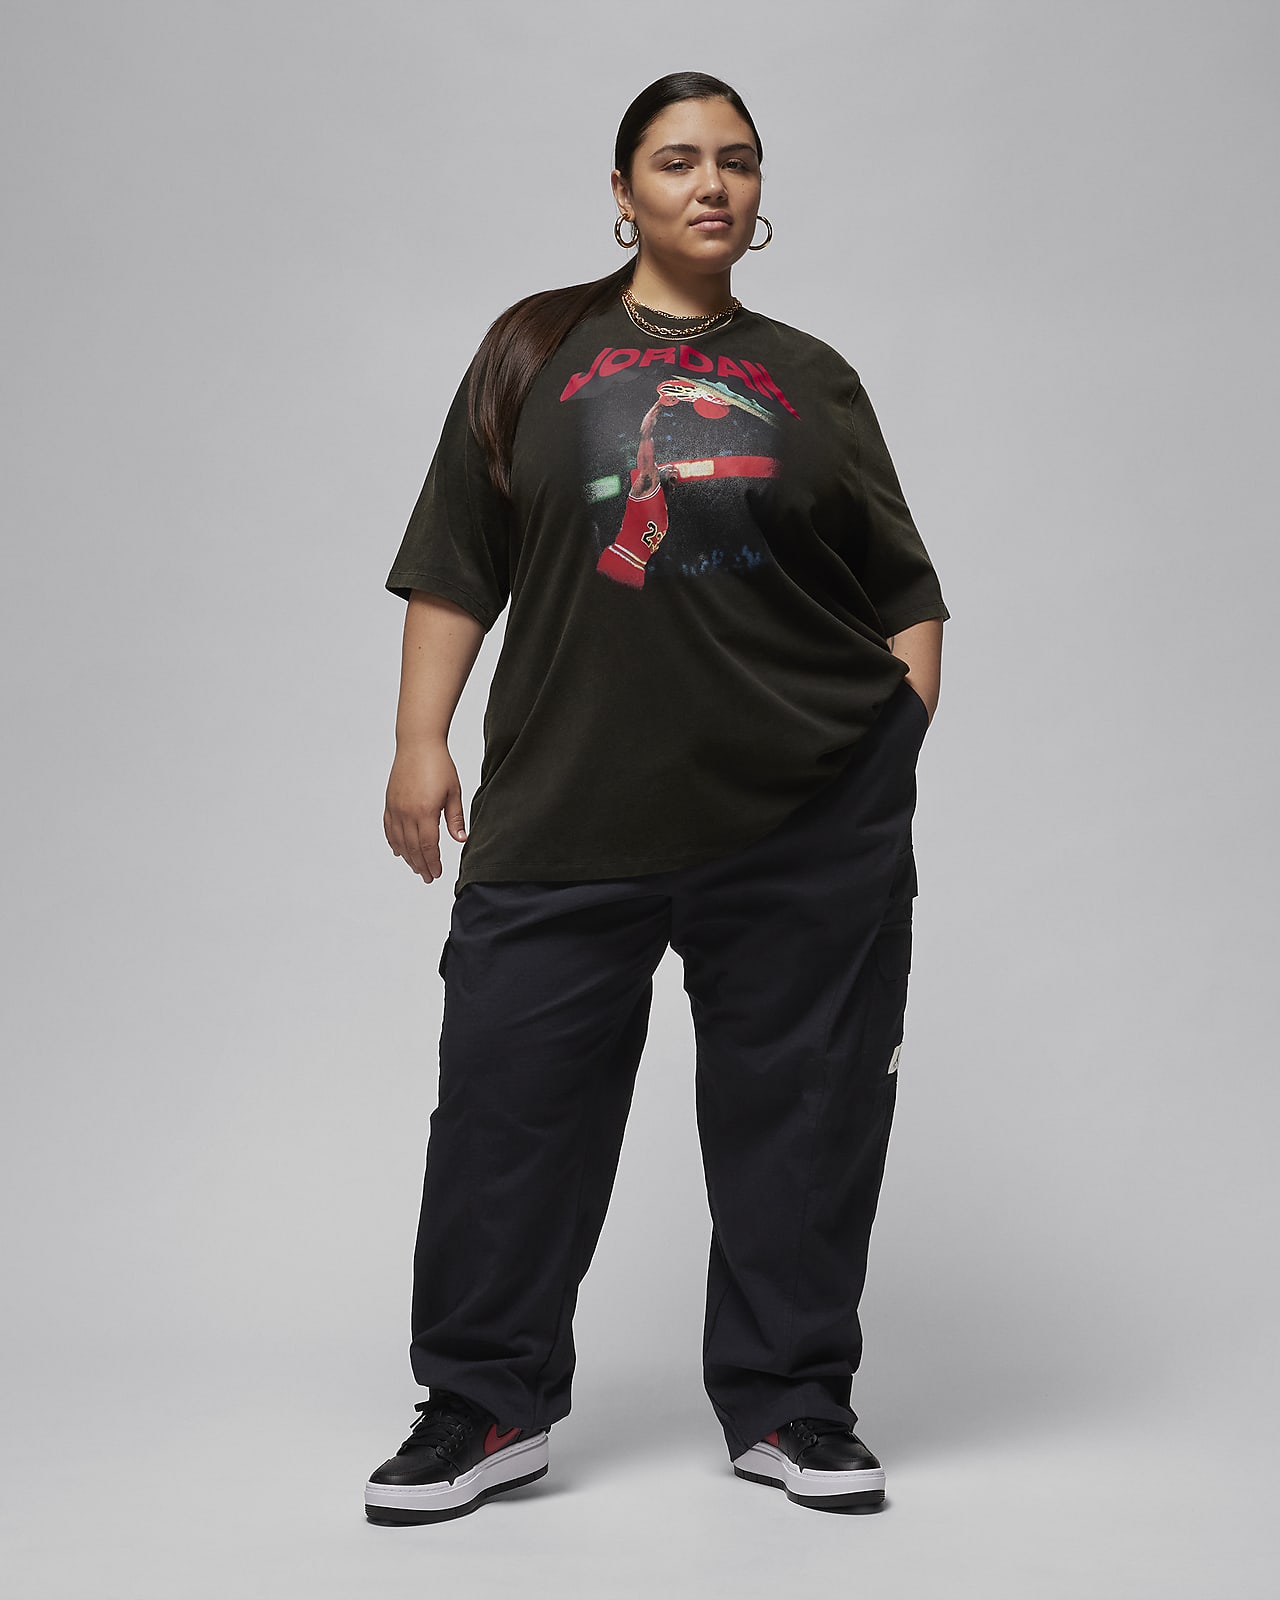 Jordan (Her)itage Women's Graphic T-Shirt (Plus Size). Nike.com